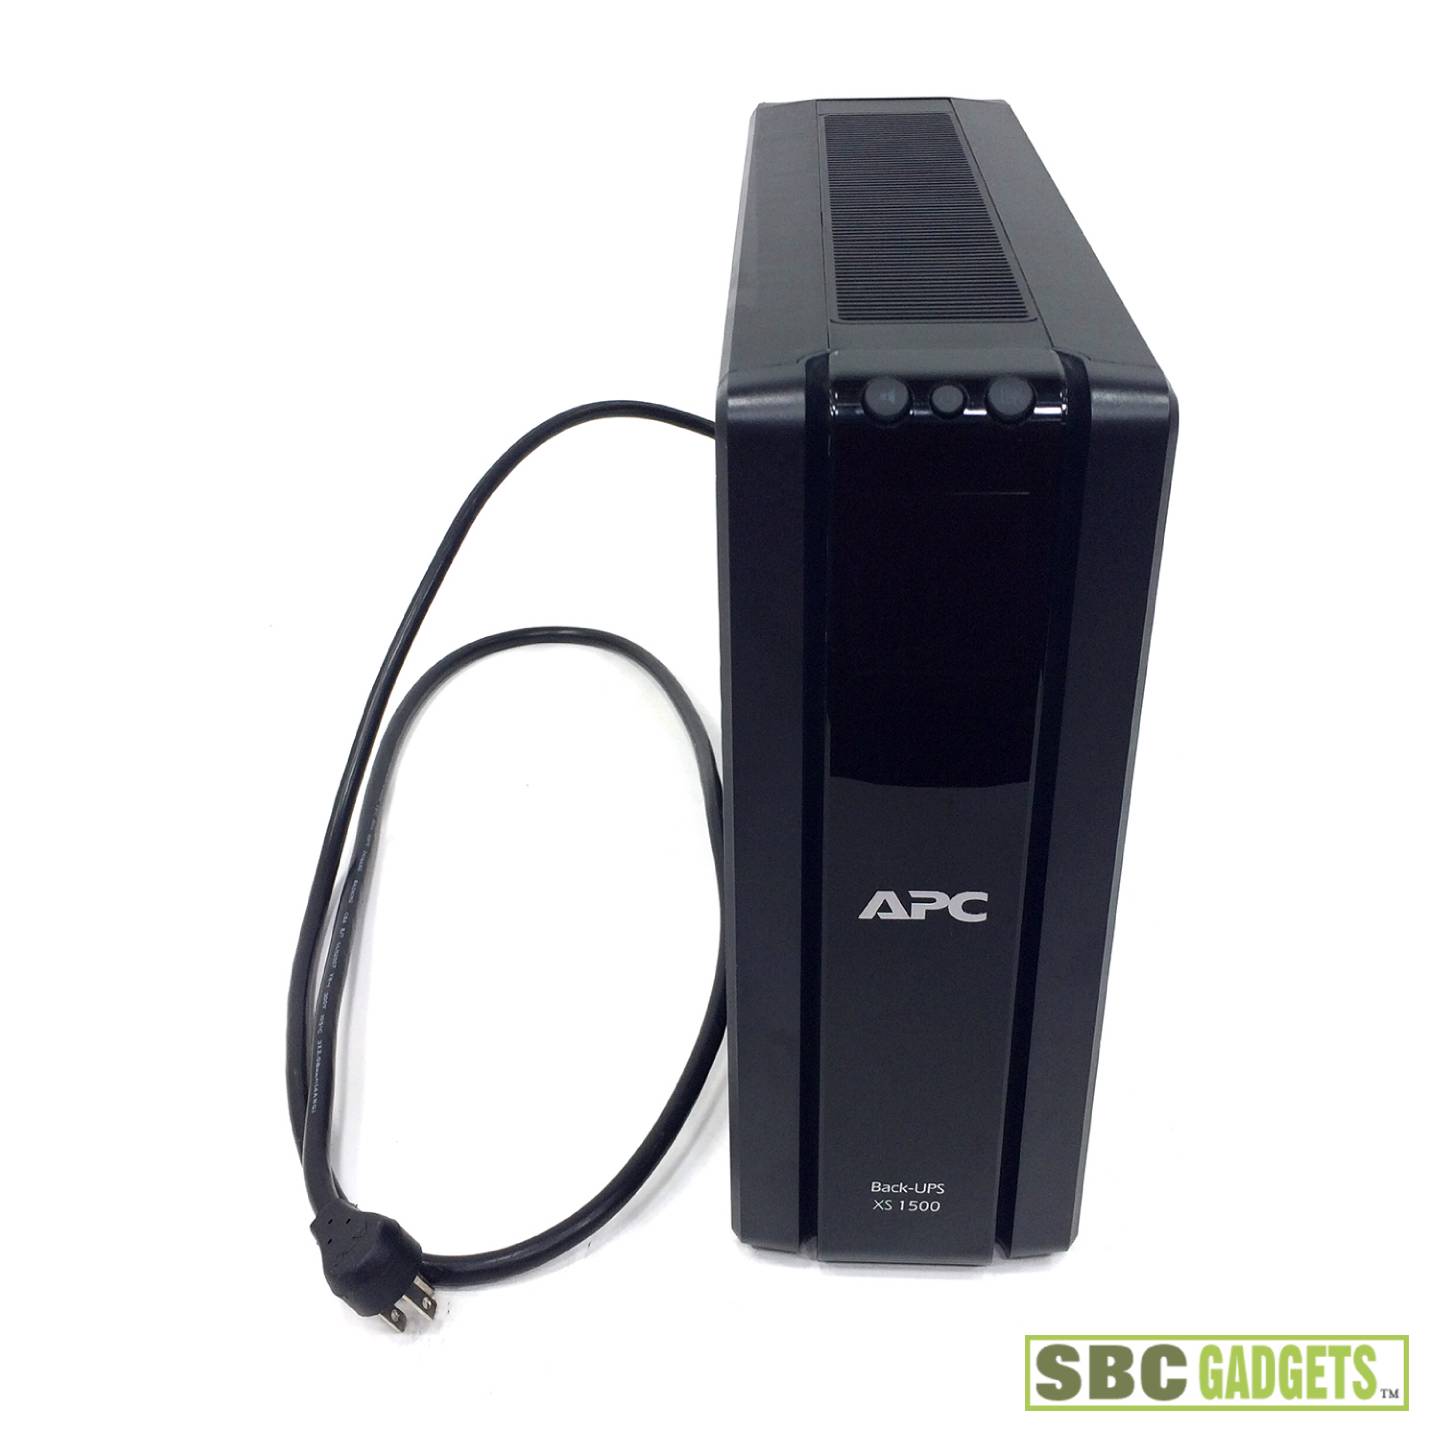 APC BackUPS XS 1500 Battery Backup and Surge Protector eBay